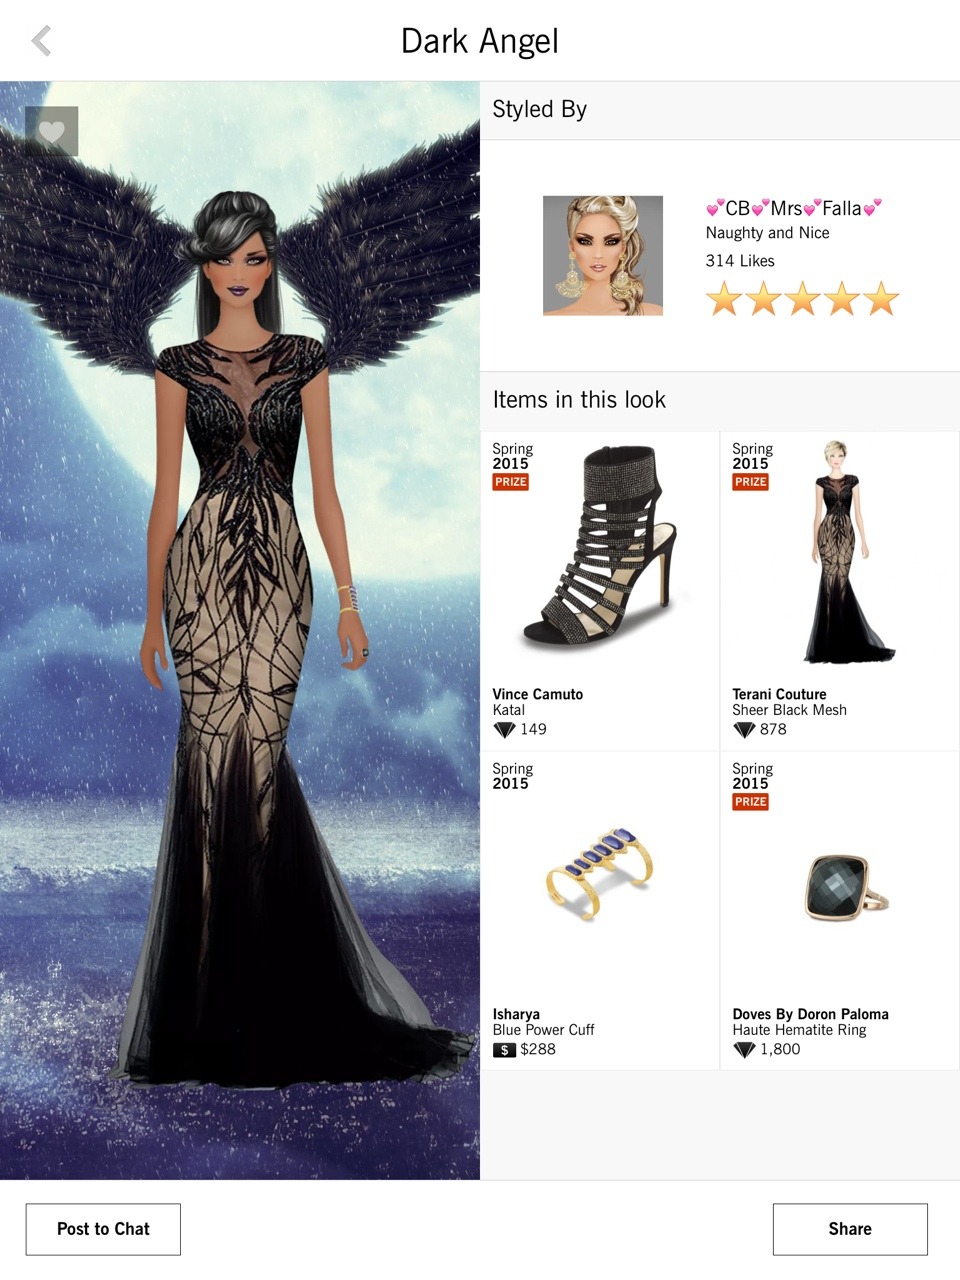 covet fashion tips dark angel